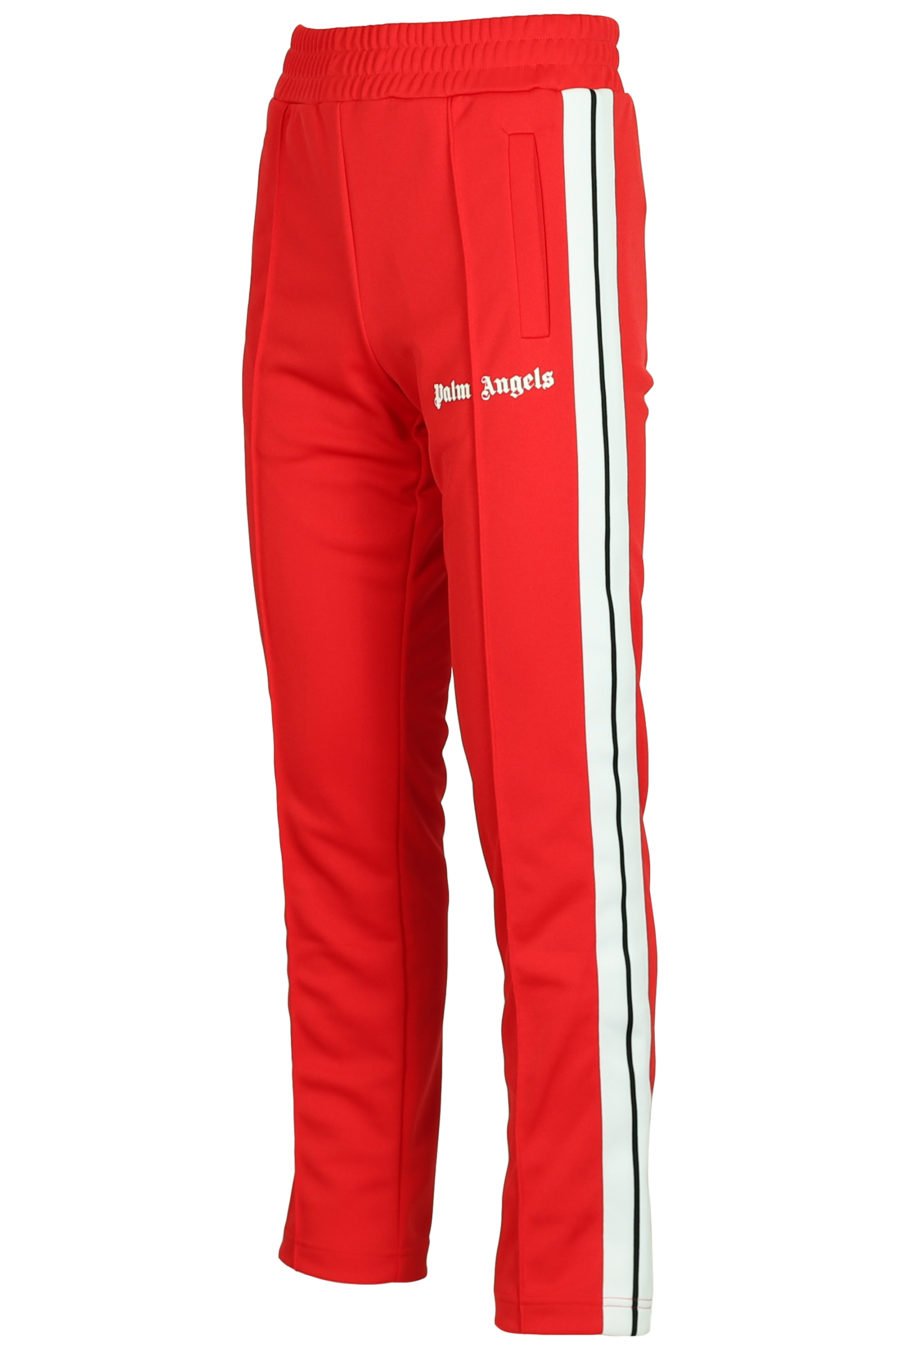 Pantalón rojo con logotipo y rayas laterales - IMG 3767